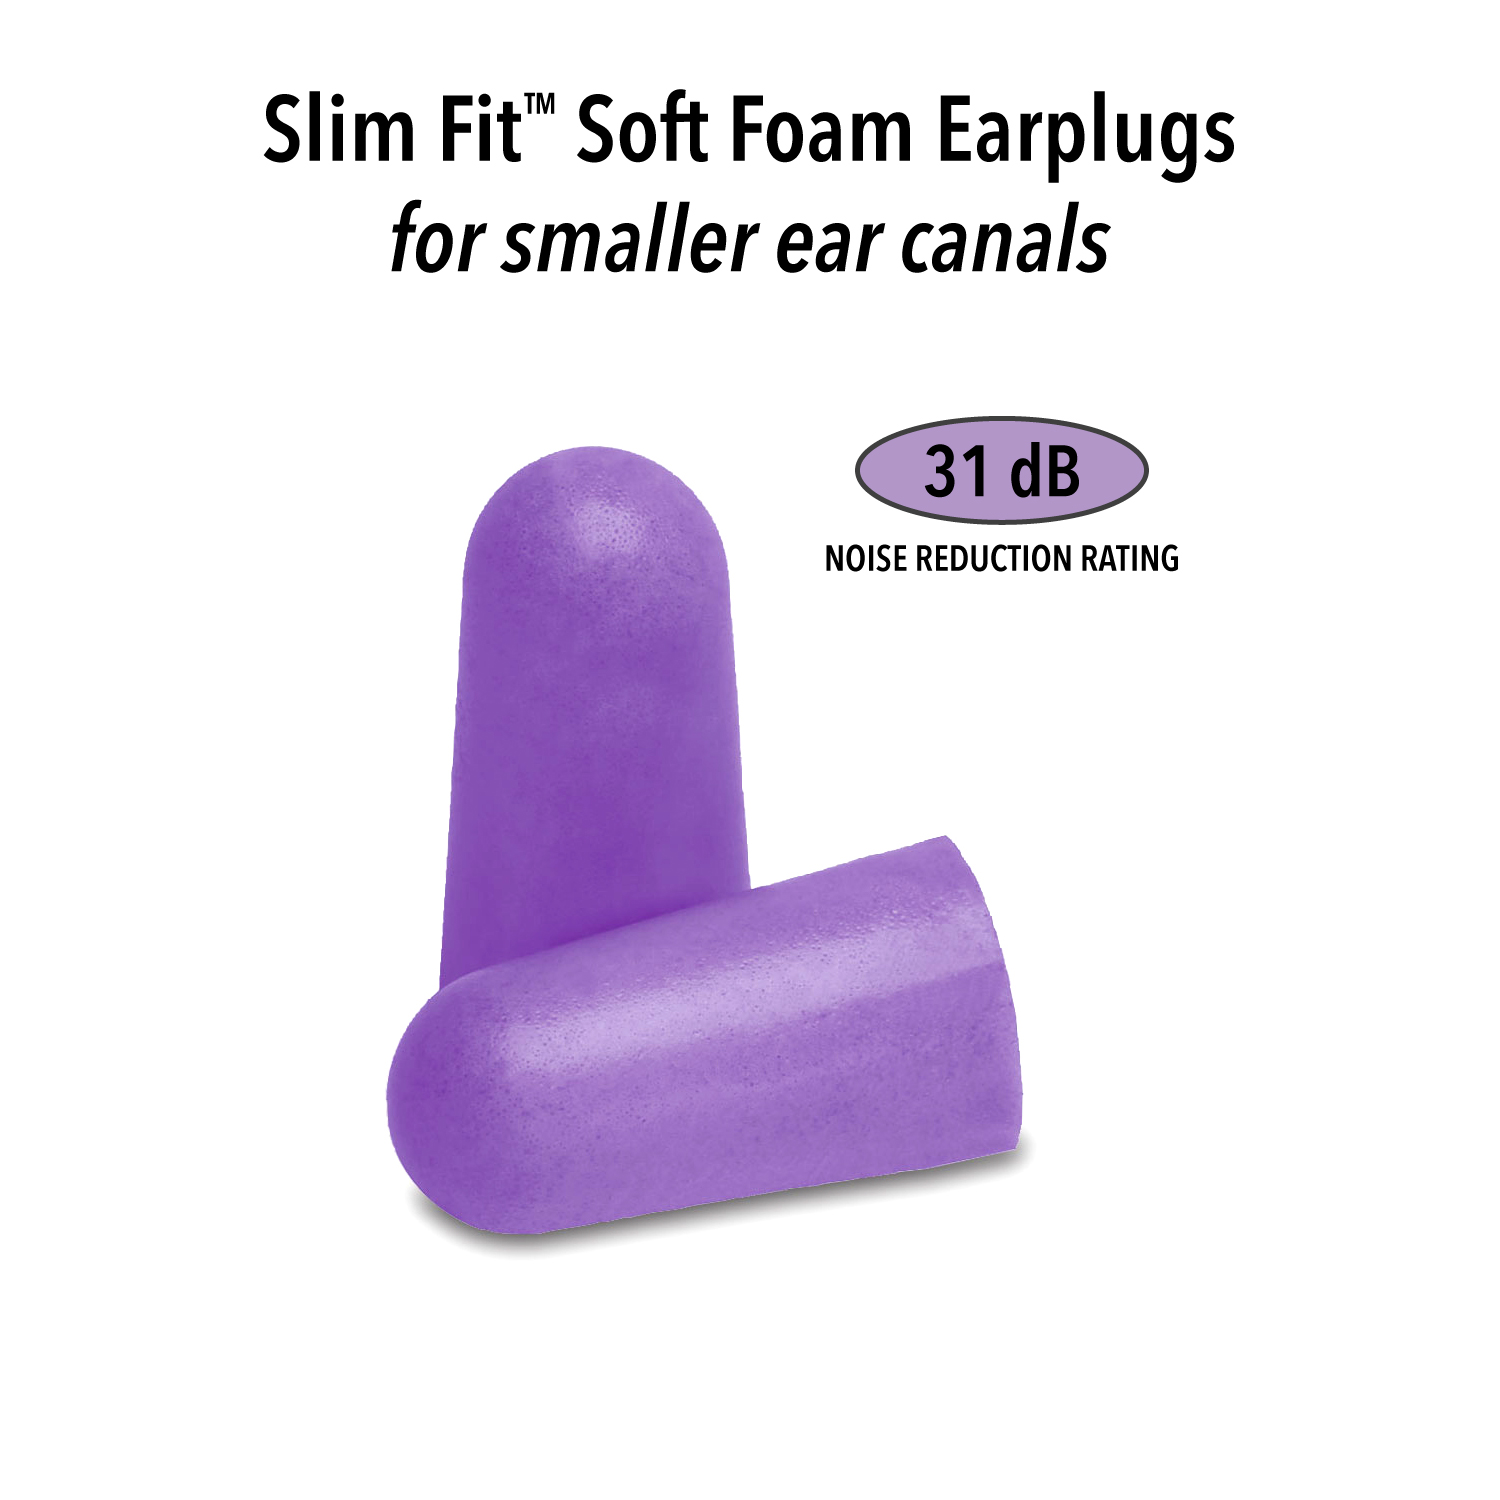 macks slim fit earplugs for small ear canals 31 db ear plugs